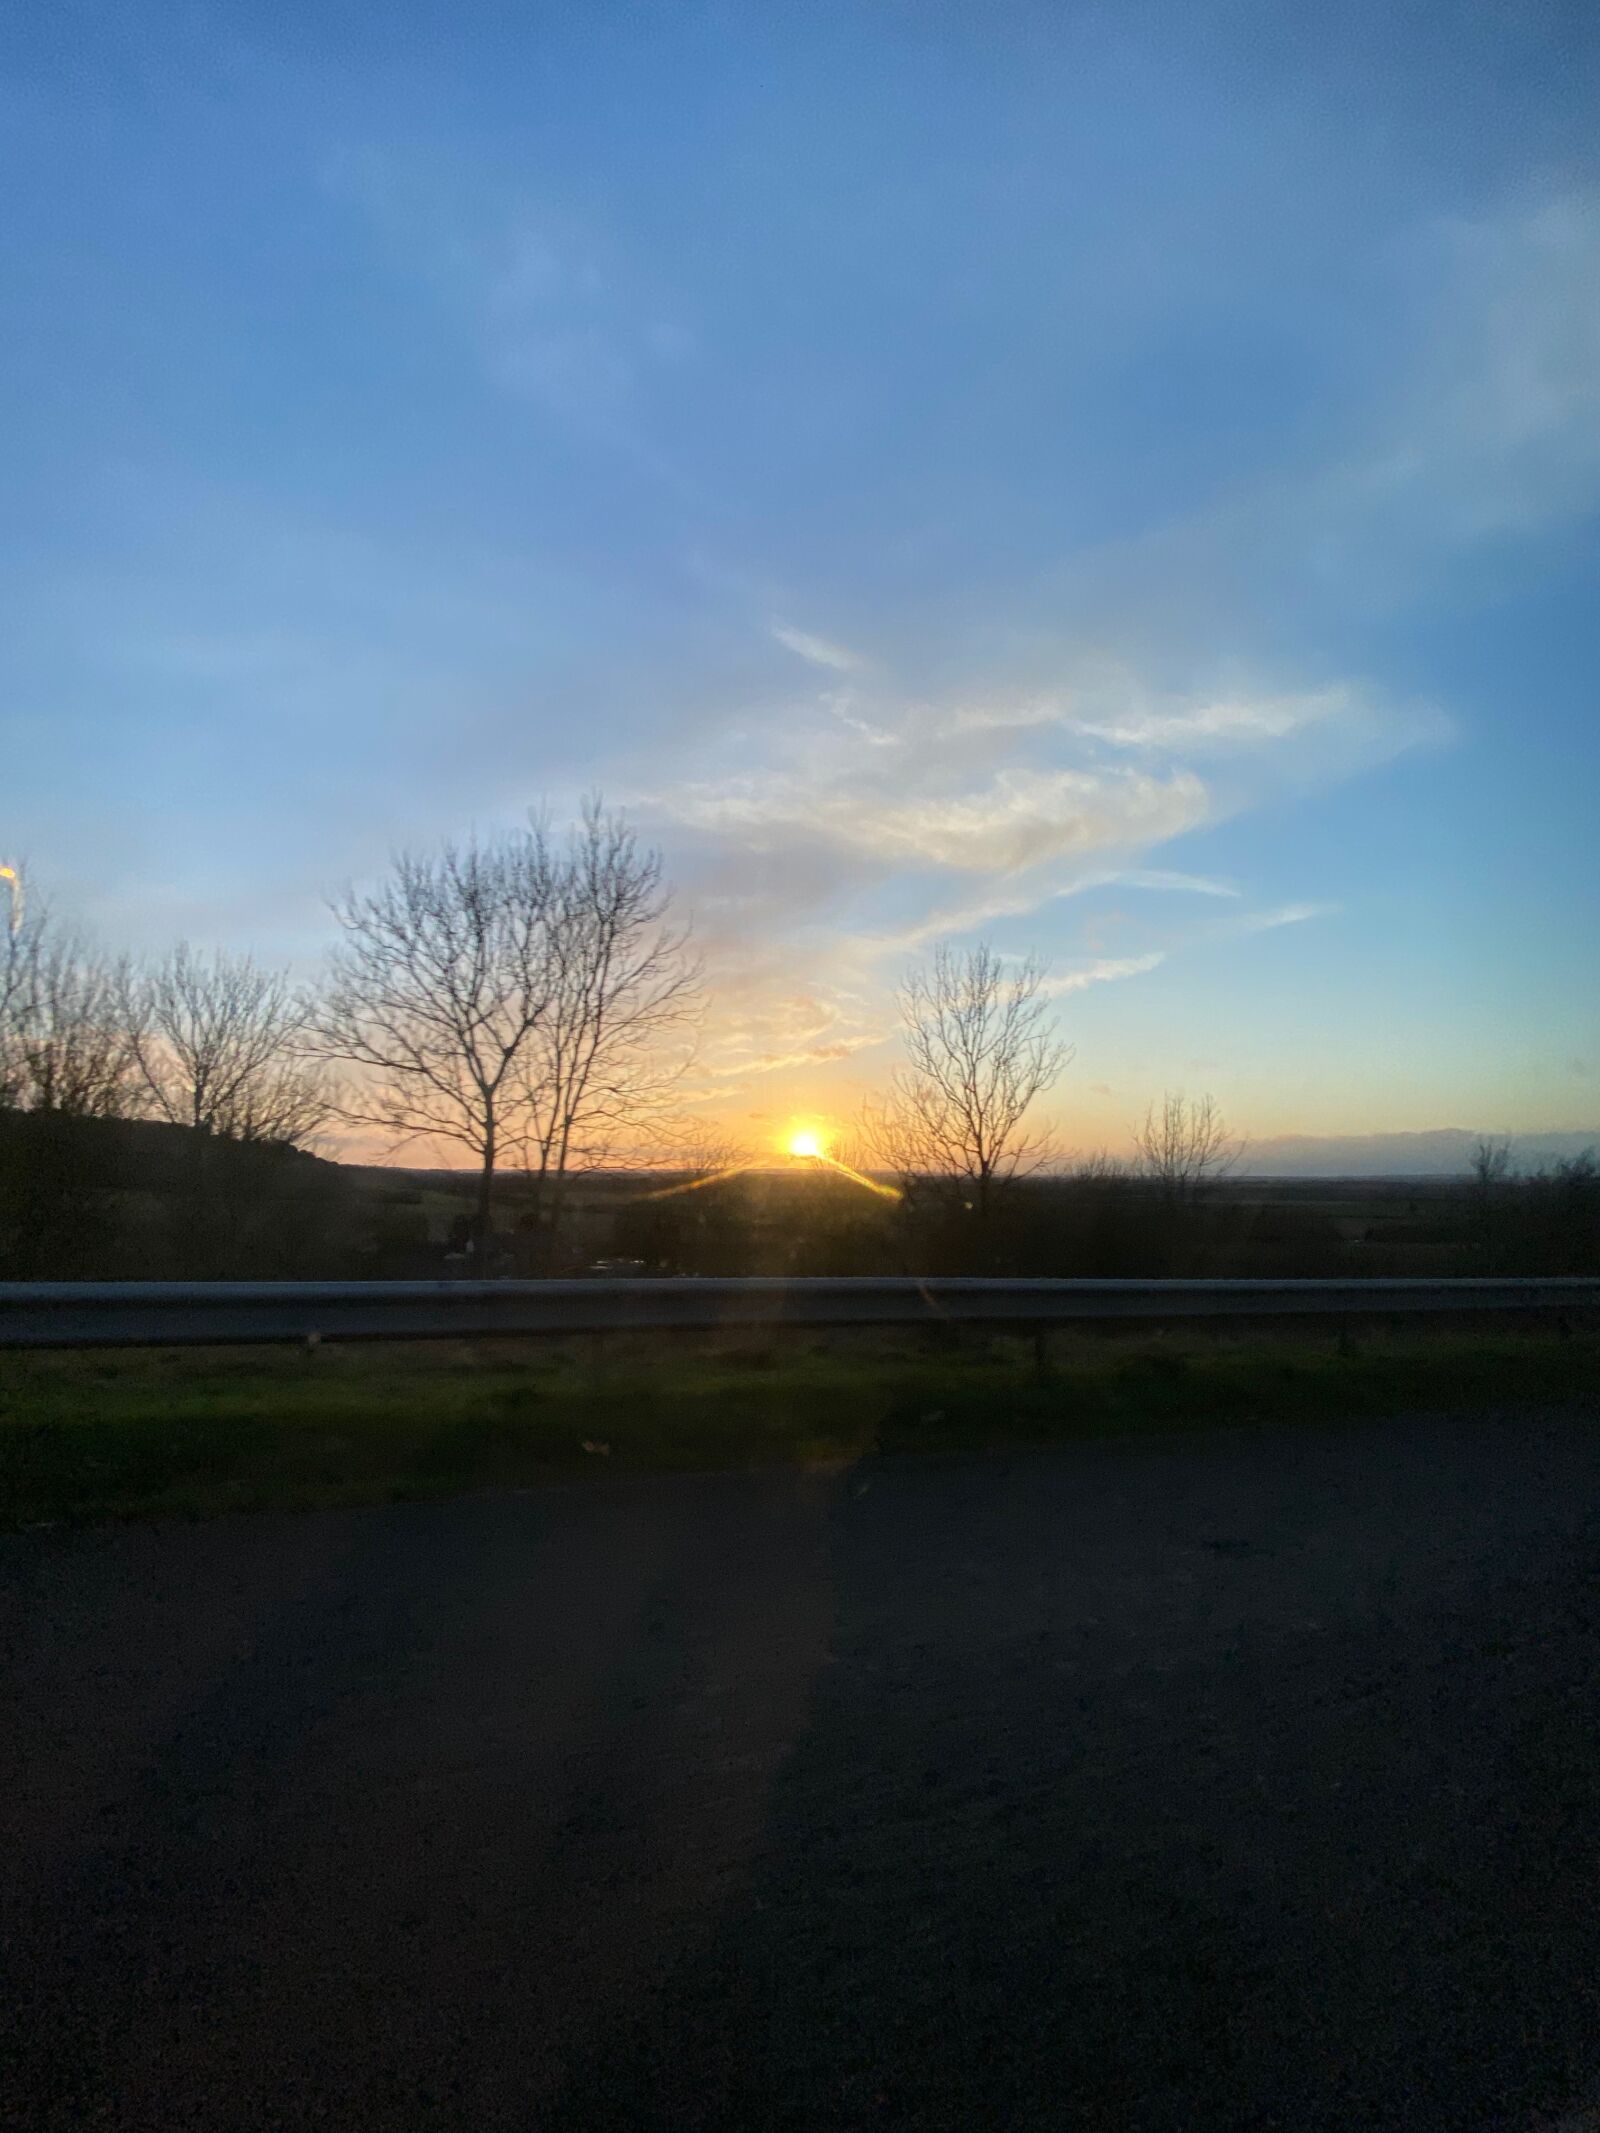 iPhone 11 Pro back triple camera 1.54mm f/2.4 sample photo. Sunset, highway, travel photography